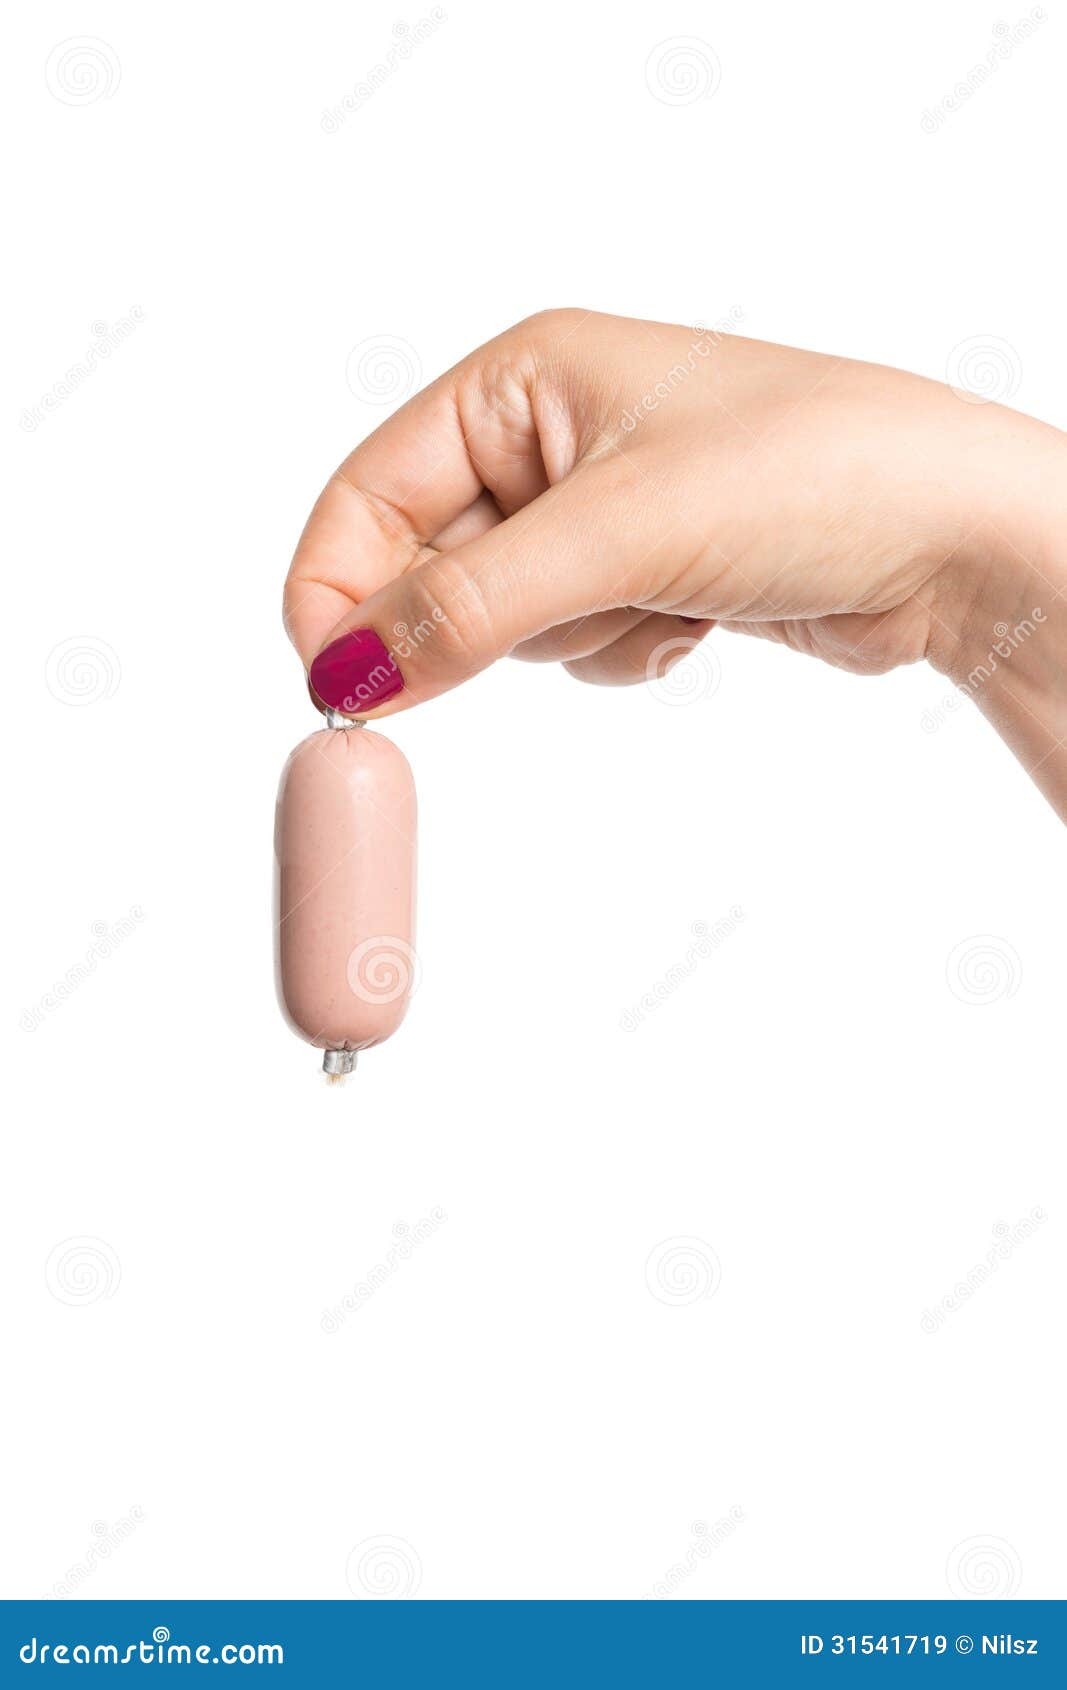 hand-holding-small-sausage-female-31541719.jpg